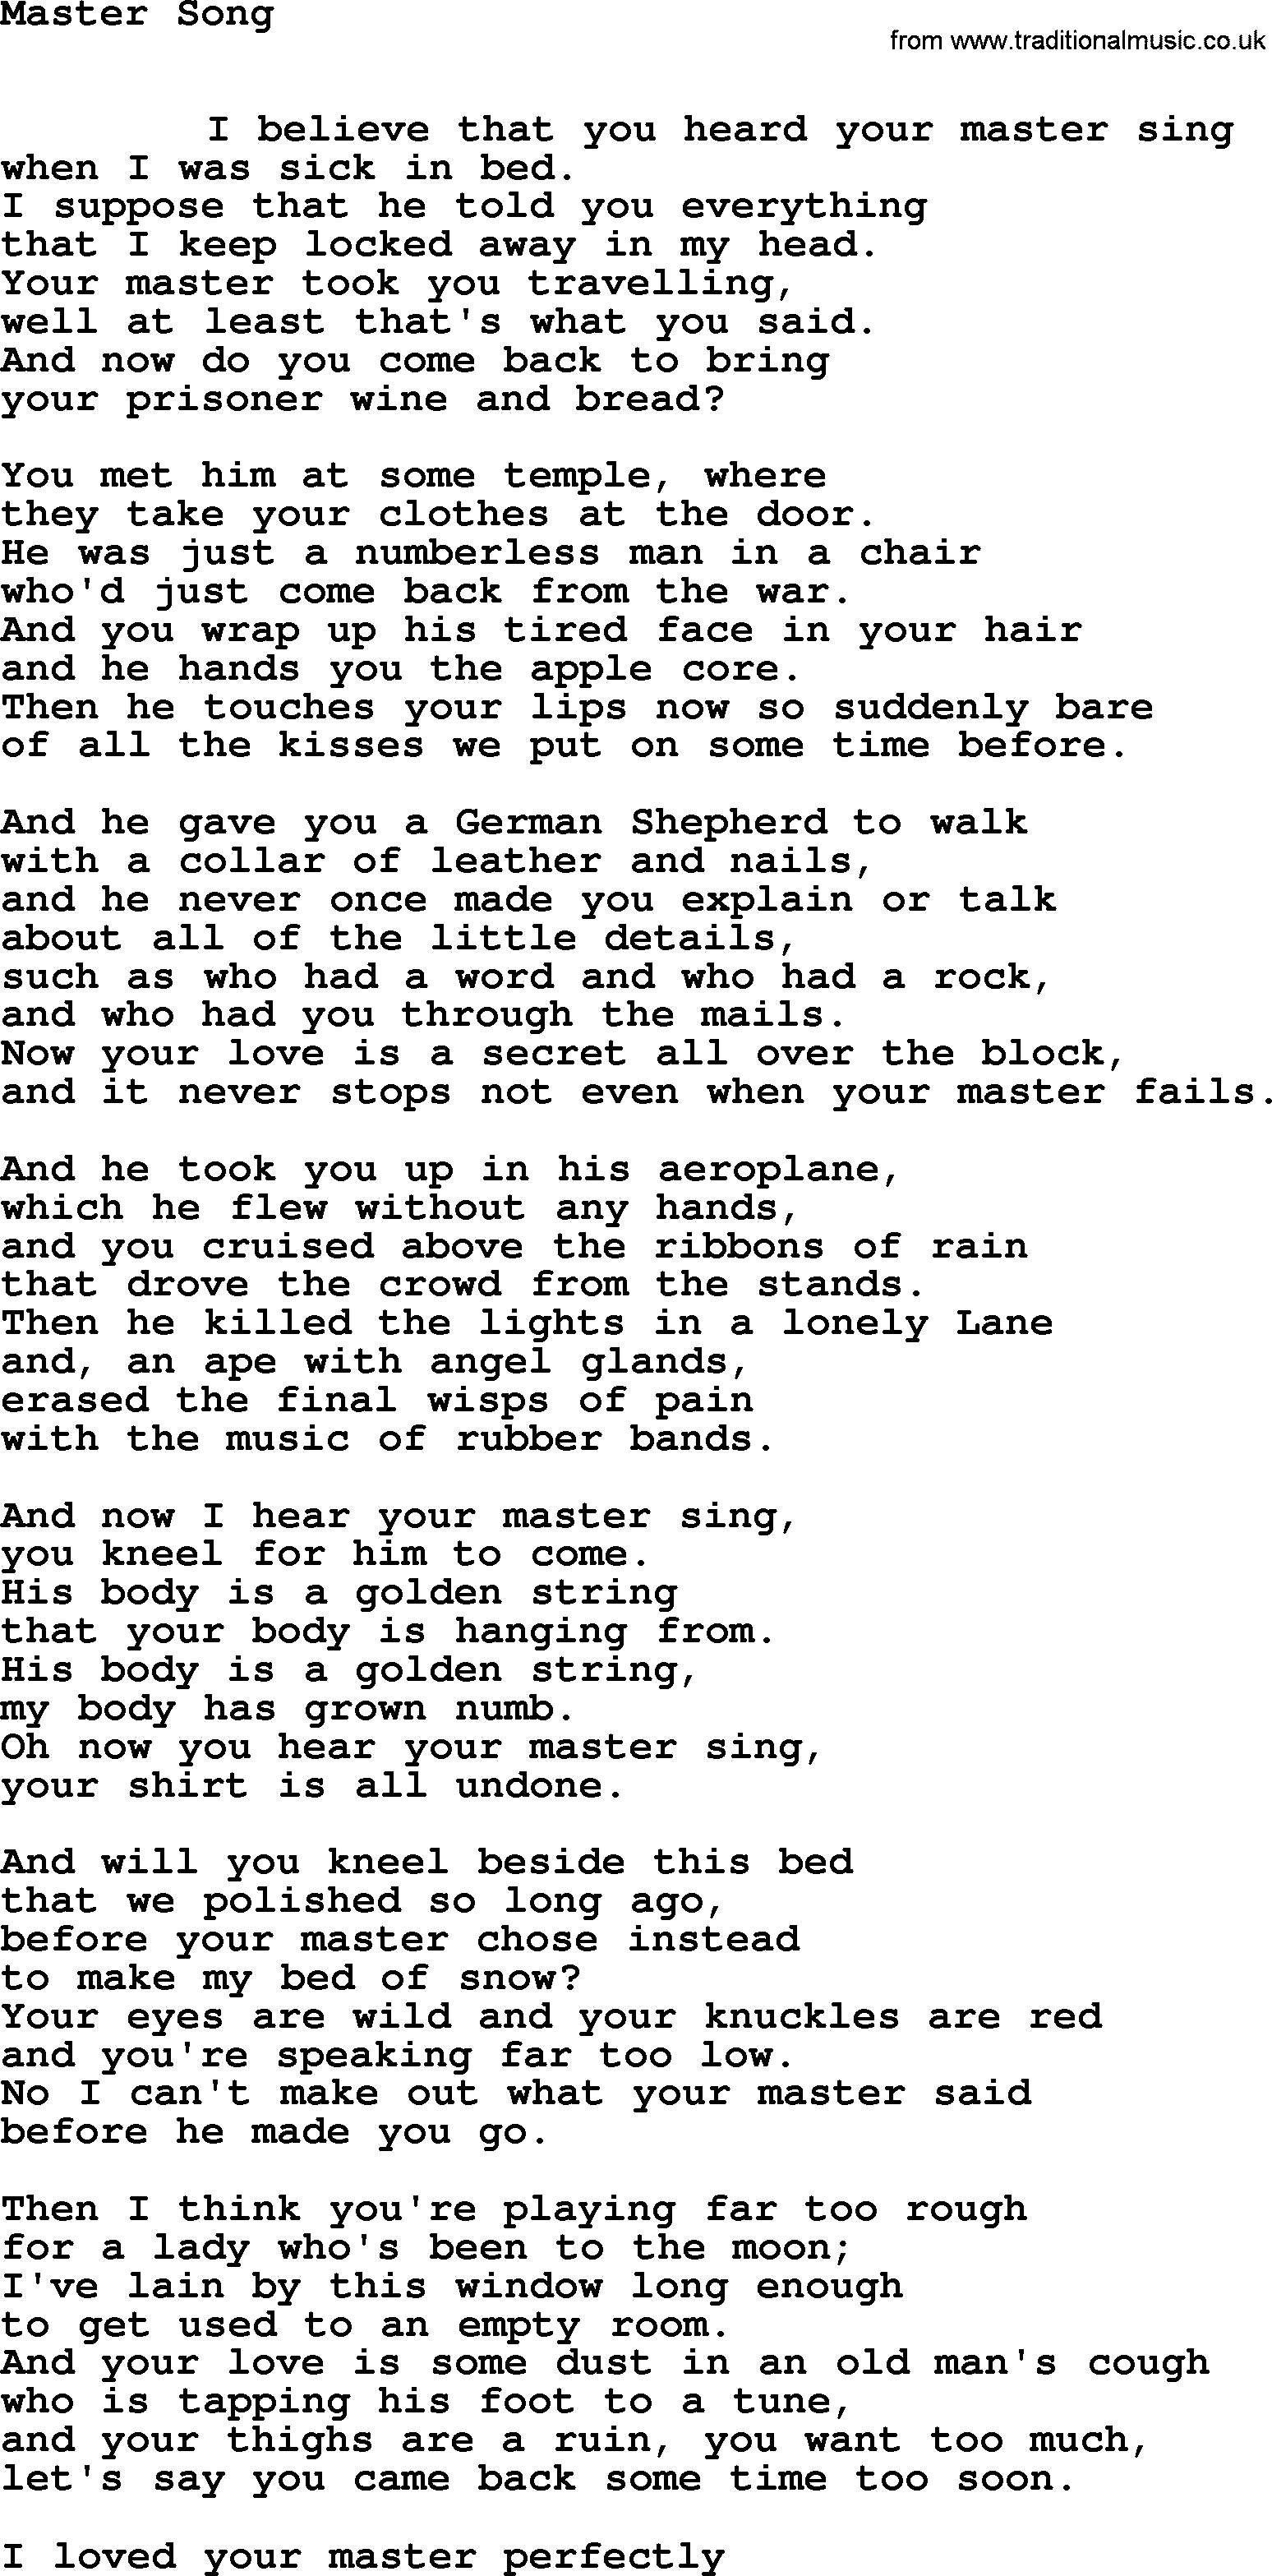 Leonard Cohen song Master Song-leonard-cohen.txt lyrics